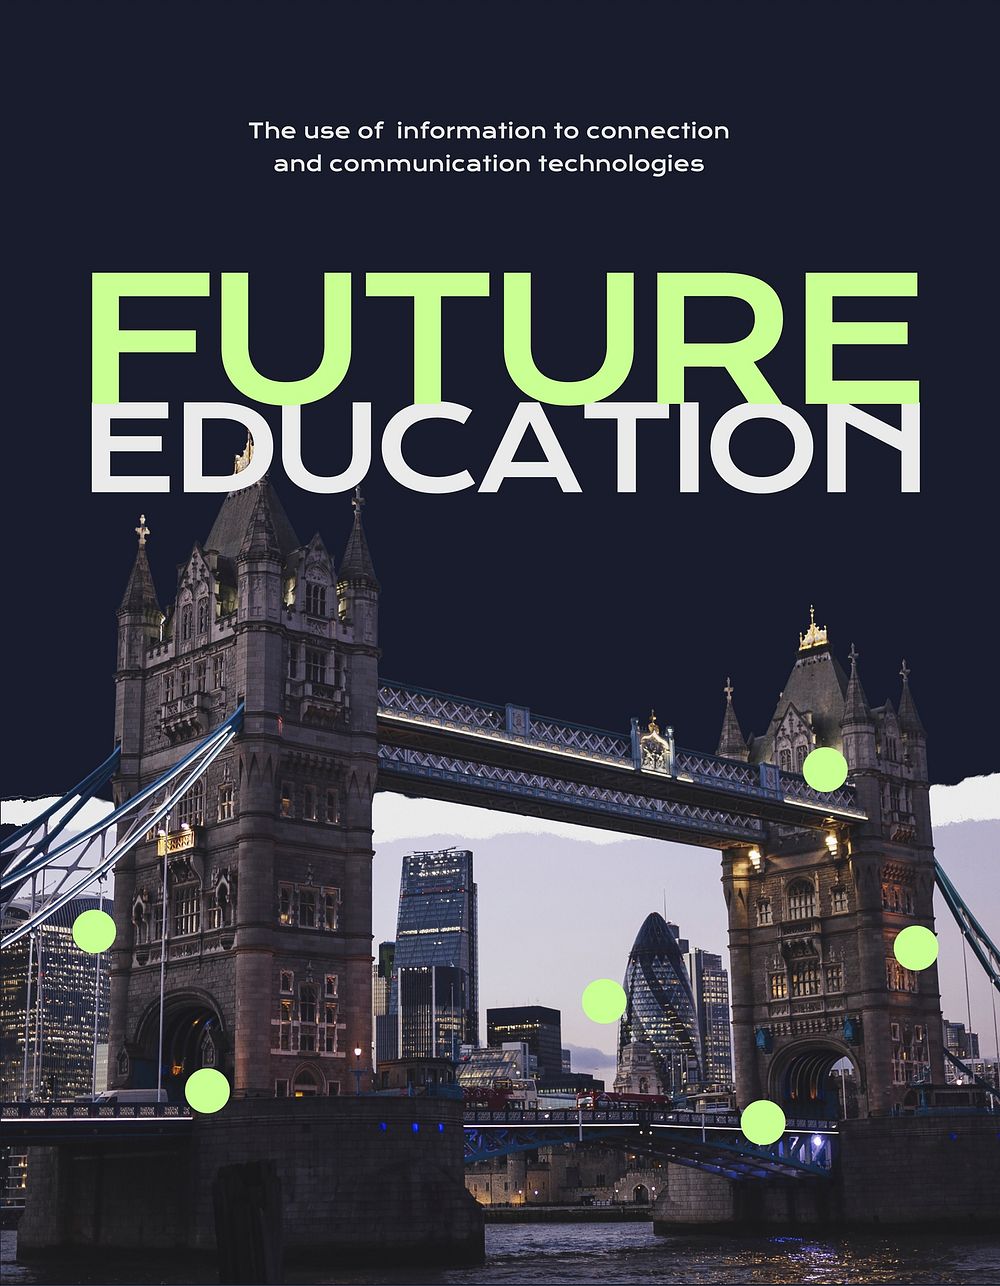 Future education flyer editable template, London's Tower Bridge photo psd